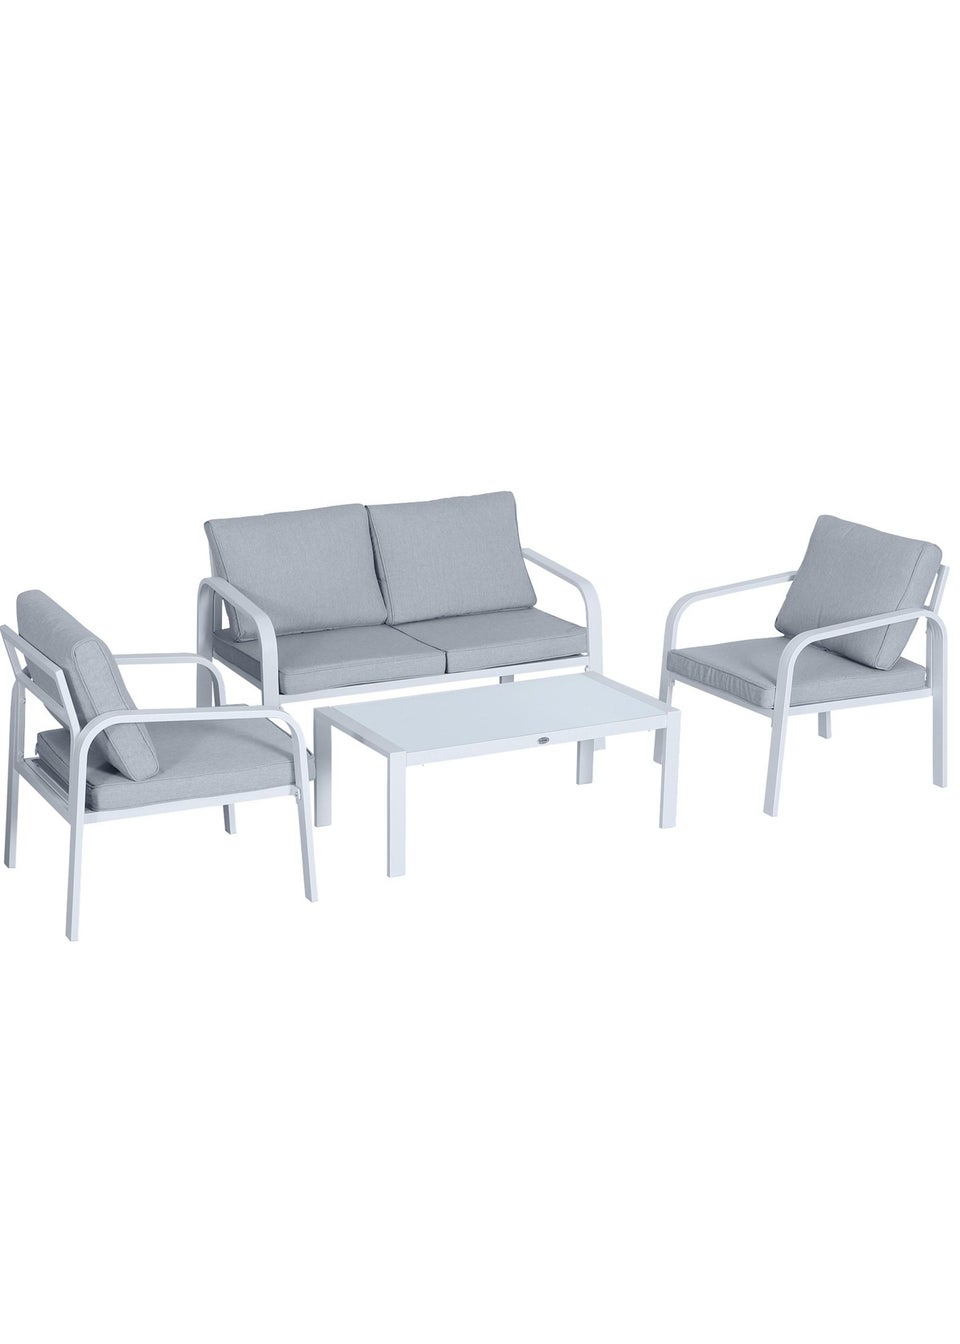 Outsunny 4pcs Aluminum Garden Sofa Set - White